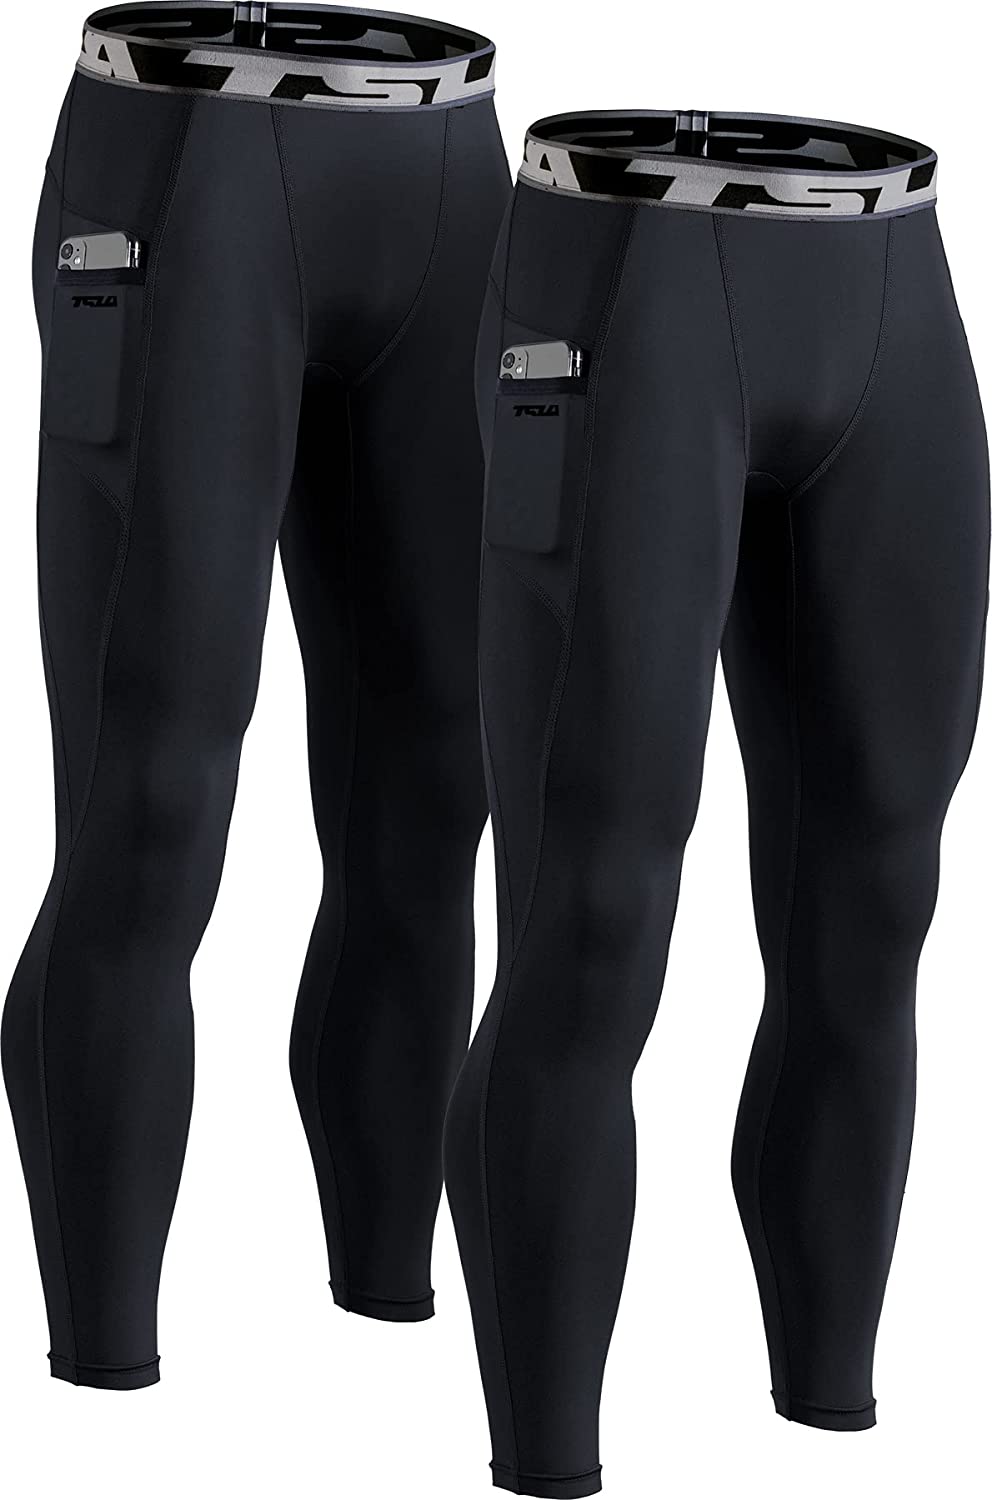  TSLA Mens Compression Pants, Cool Dry Athletic